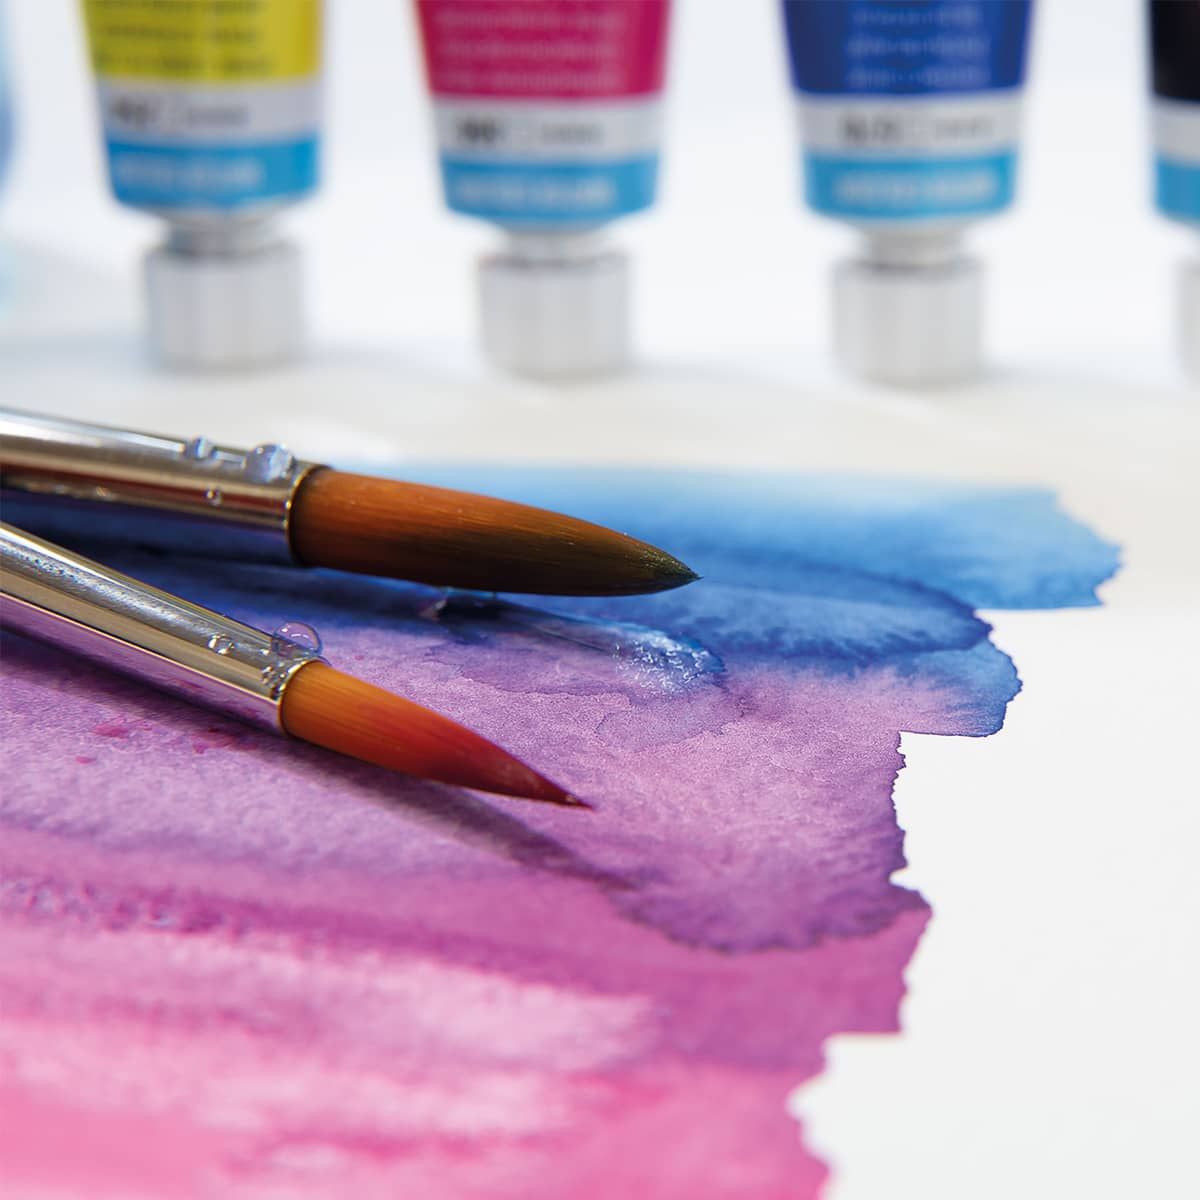 Glokers Canvas Panels Painting Kit | Art Supplies Set Includes Paint Palette, Sponge Brushes, Canvases, Paintbrushes & Mixing